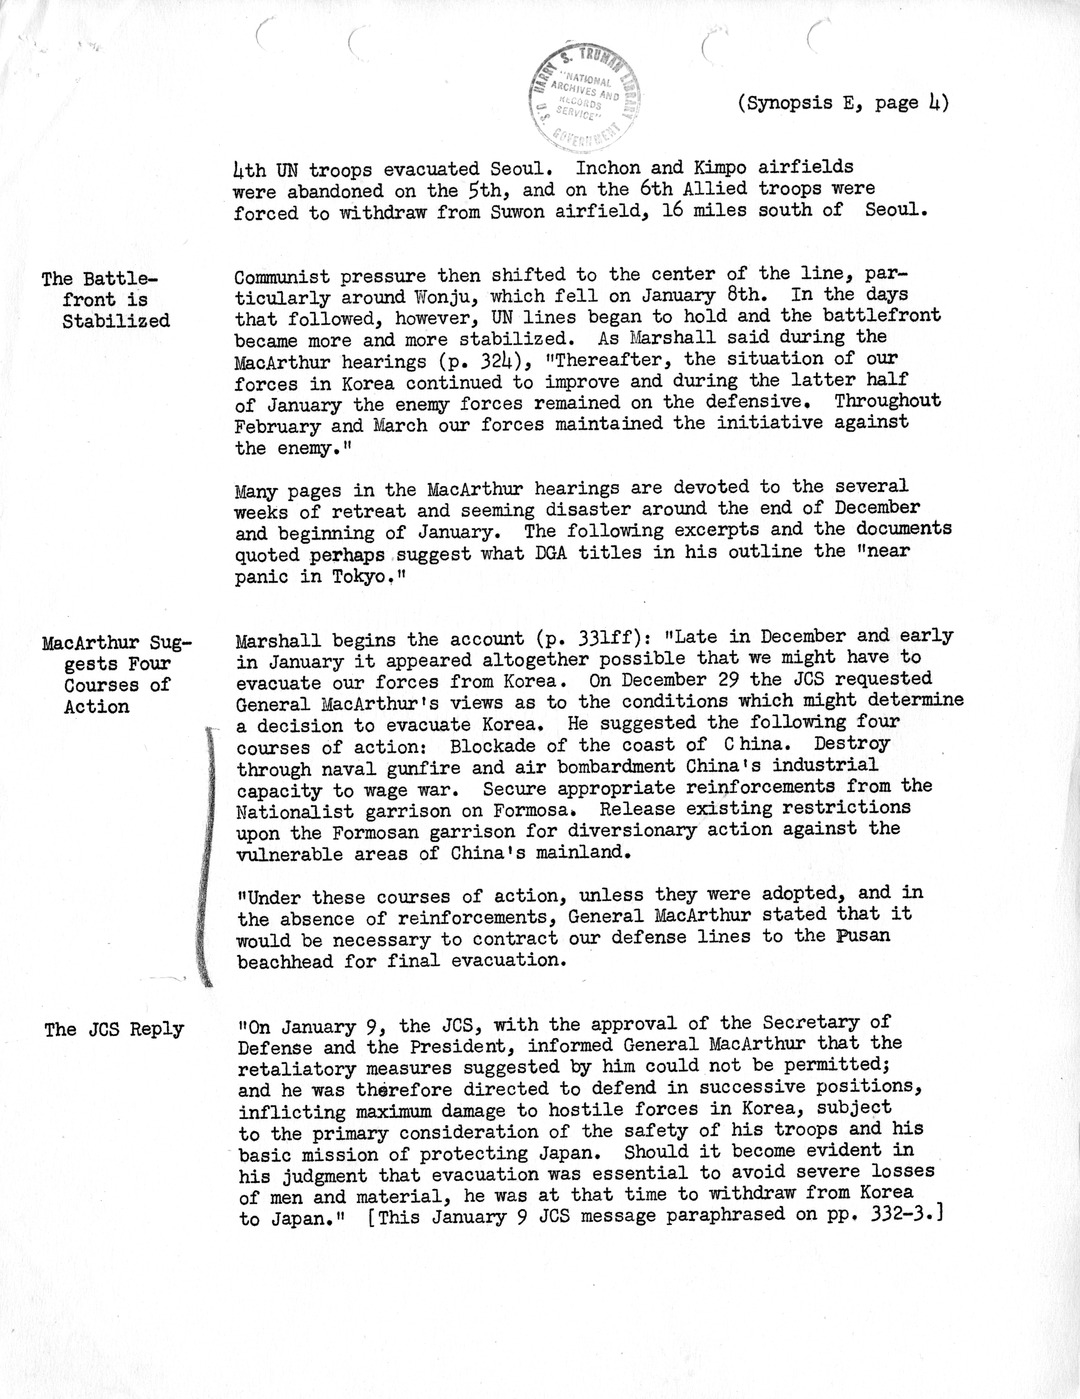 Synopsis E, Korea - Retreat from the Yalu, December 1950-January 1951